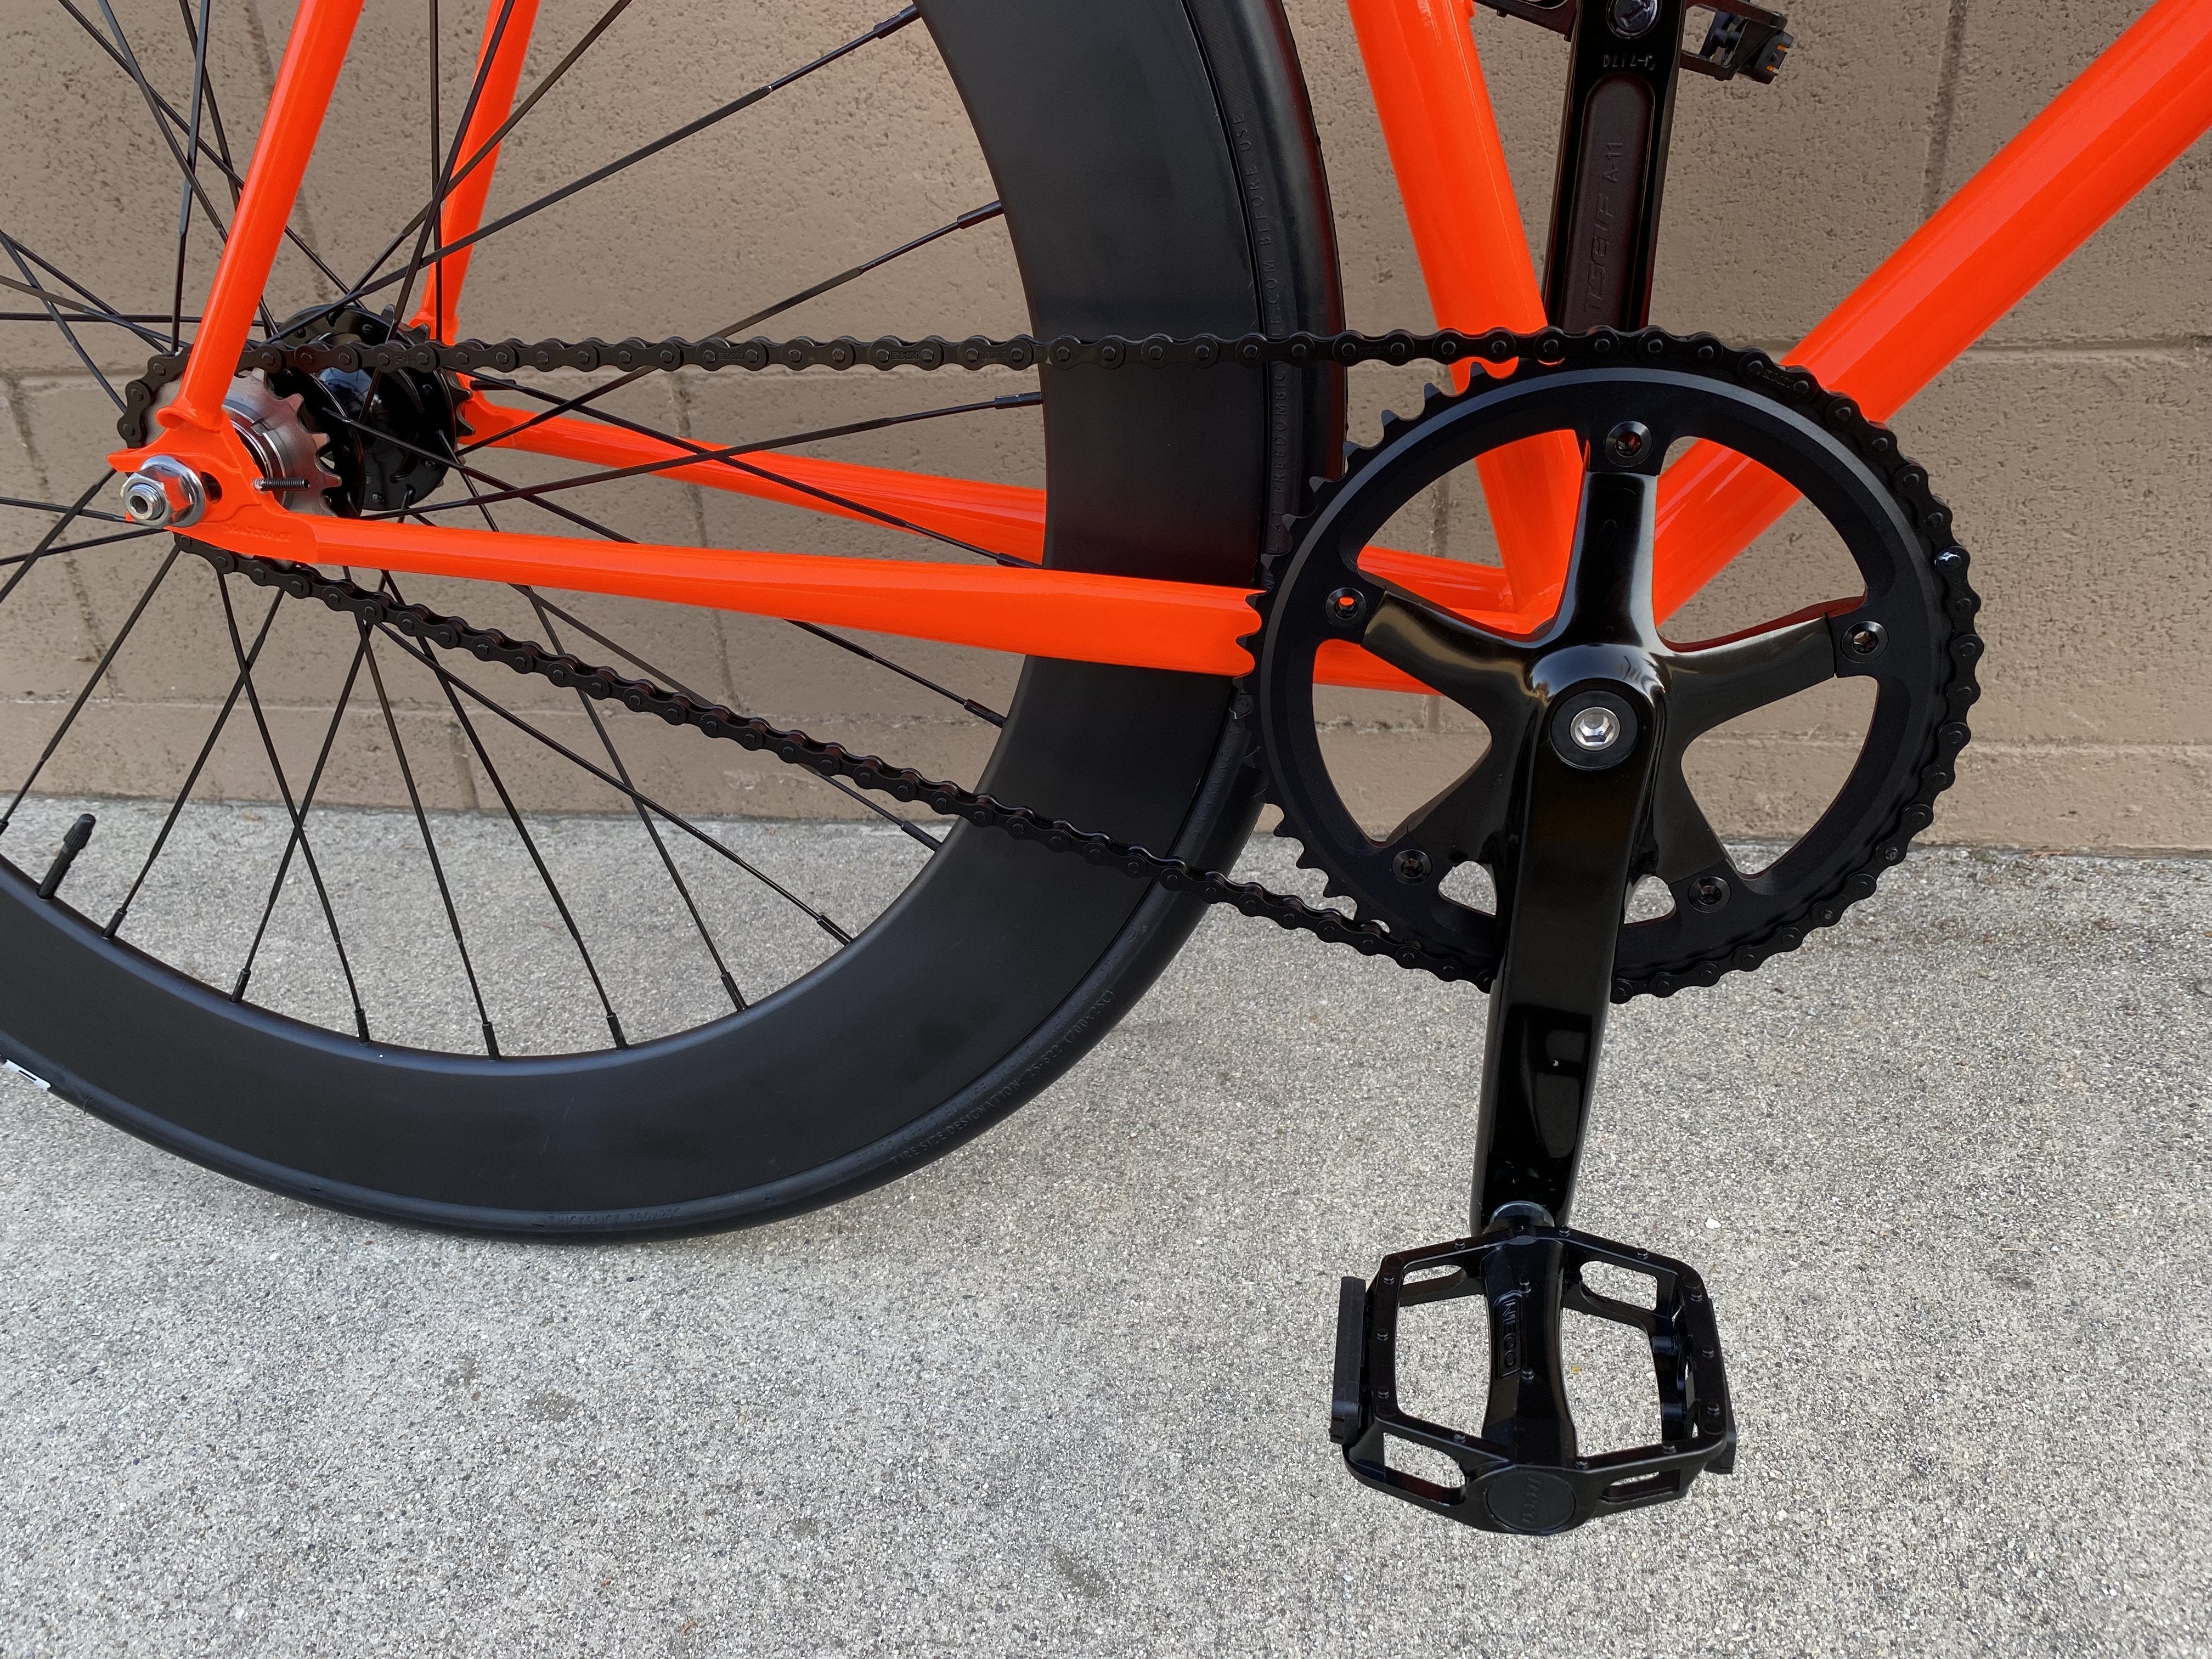 Sgvbicycles 4130 Chromoly Track Bike 55cm Orange